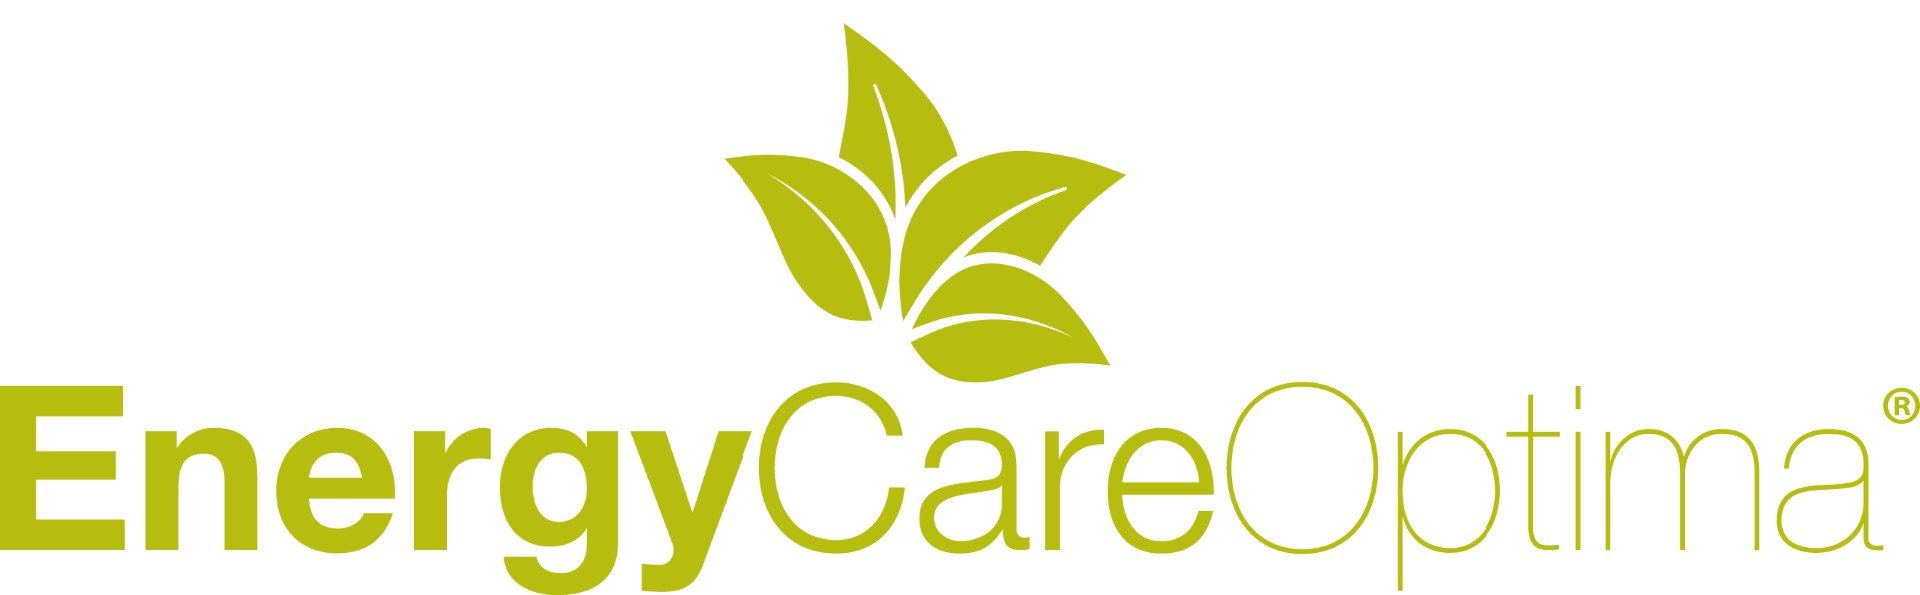 Energy Care Optima logo